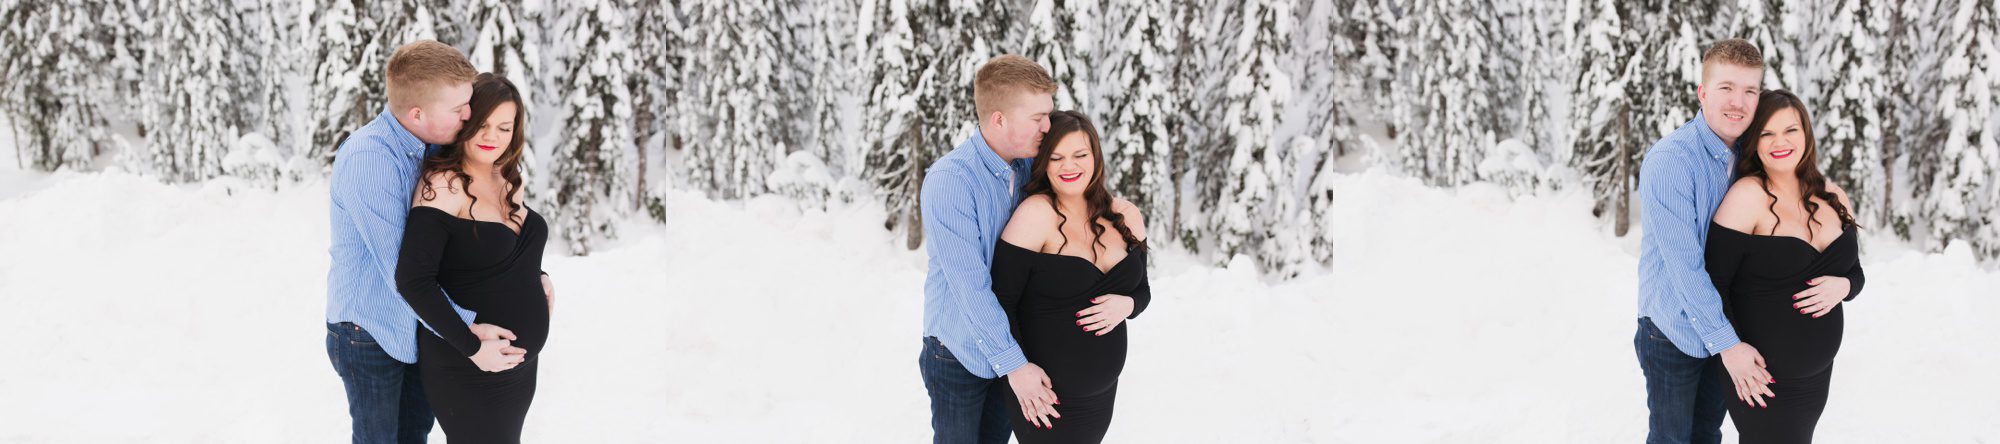 Seattle maternity photographer | maternity photography seattle | military maternity photographer